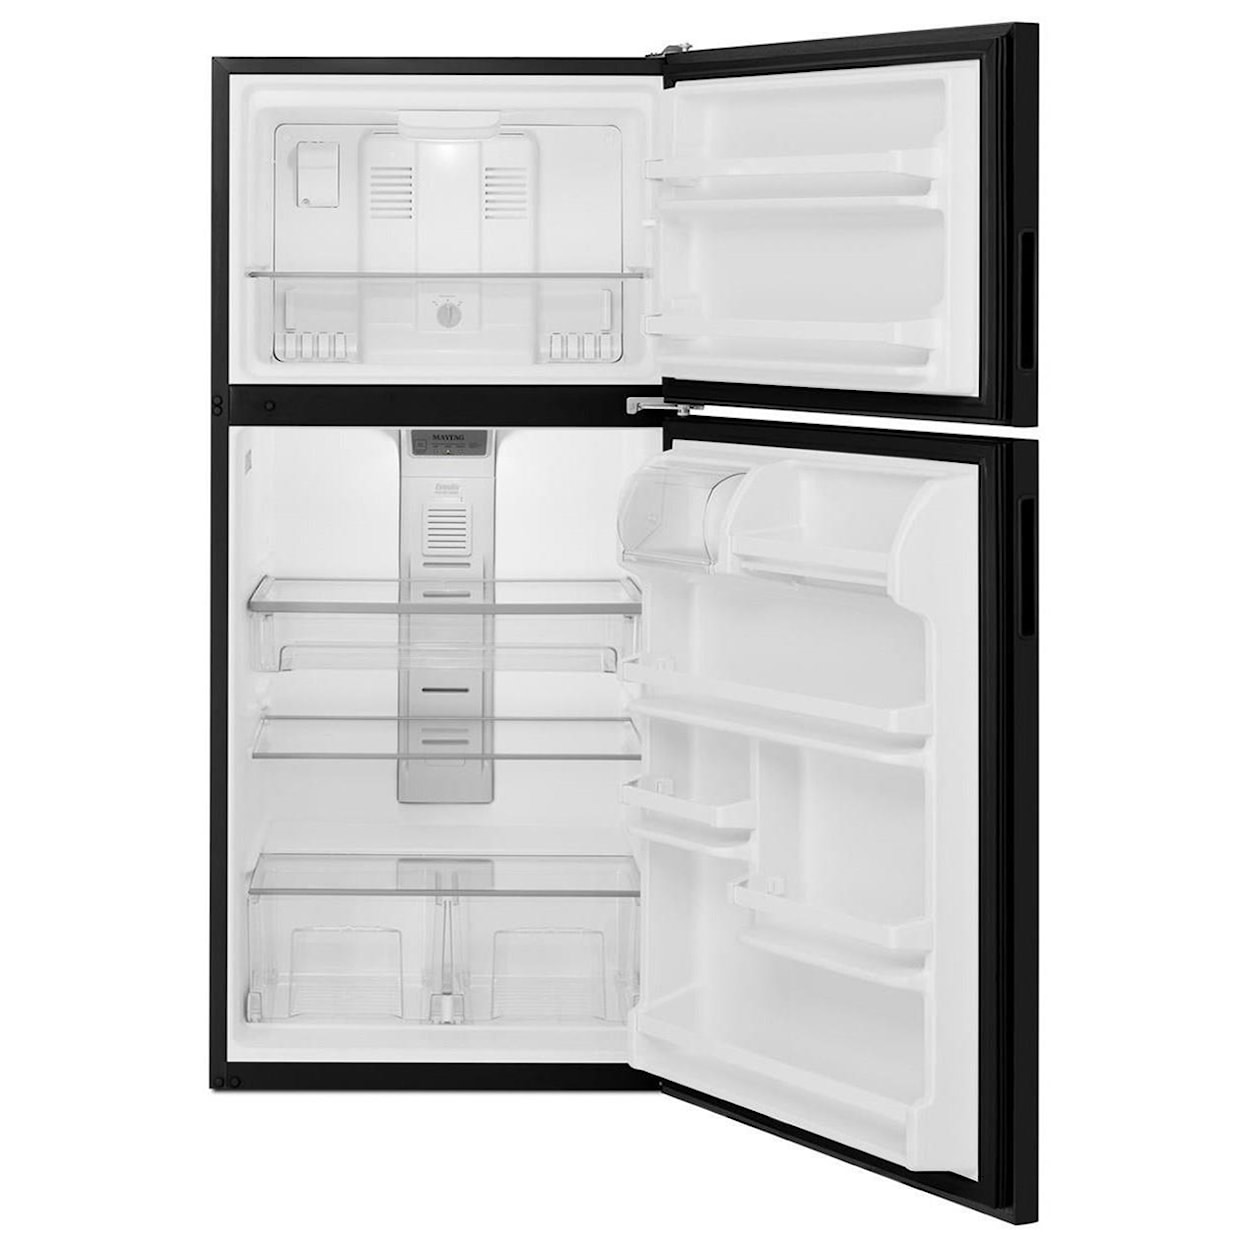 Maytag Top-Freezer Refrigerators 30-Inch Wide Top Freezer Refrigerator